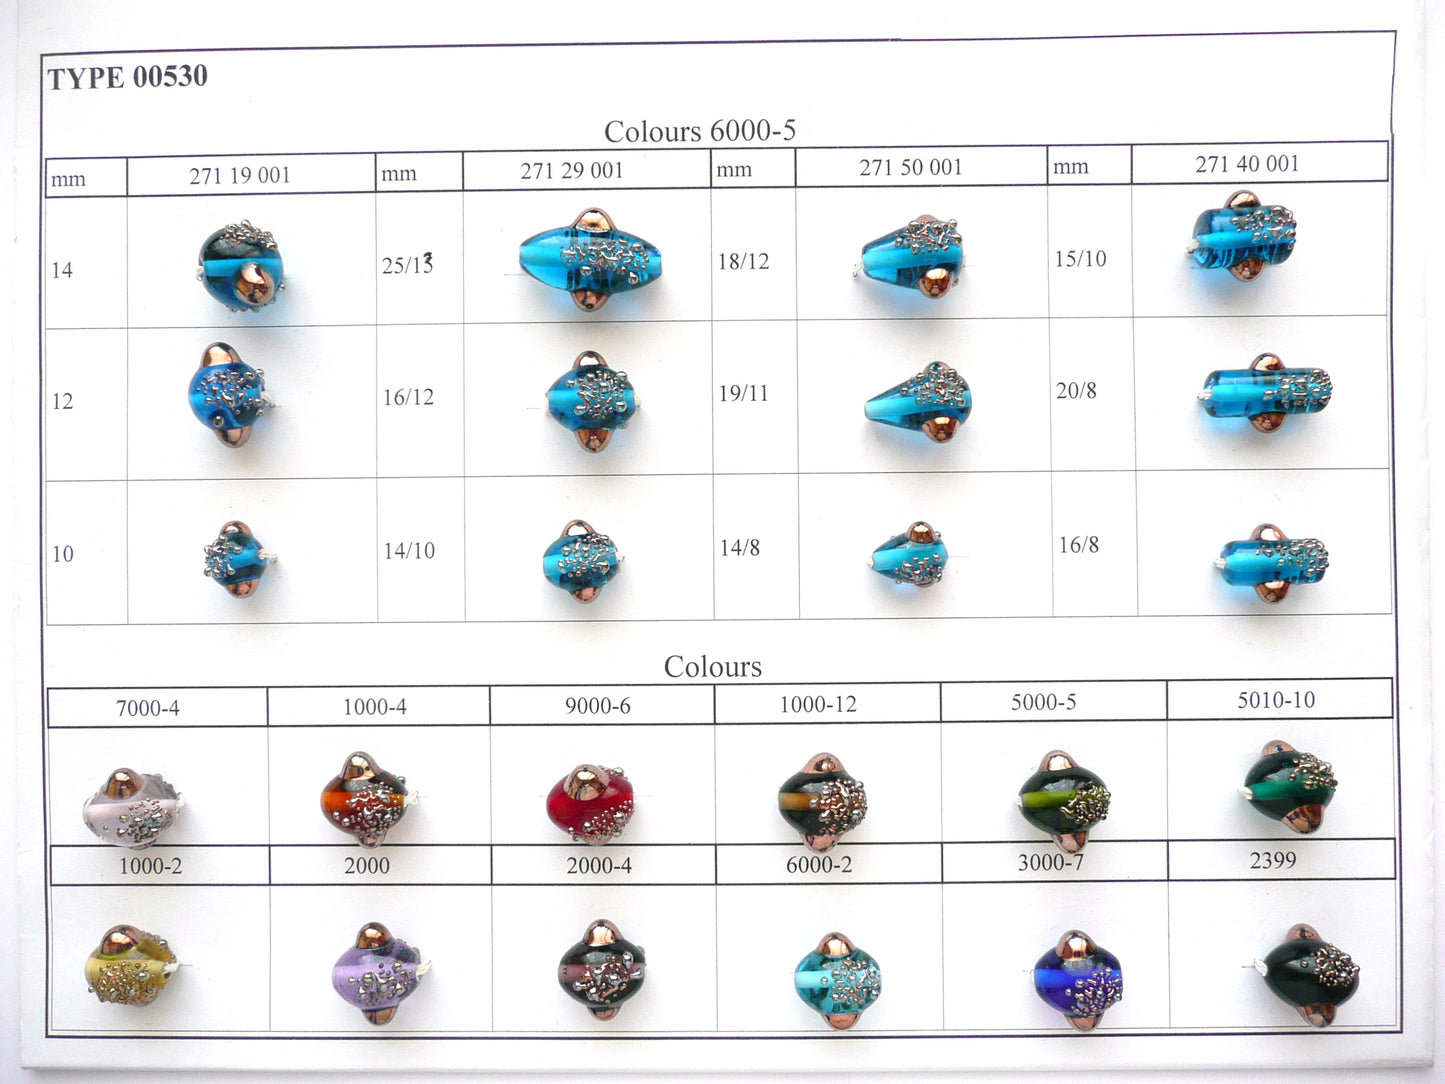 30 pcs Lampwork Beads 530 / Teardrop/Pear (271-50-001), Handmade, Preciosa Glass, Czech Republic